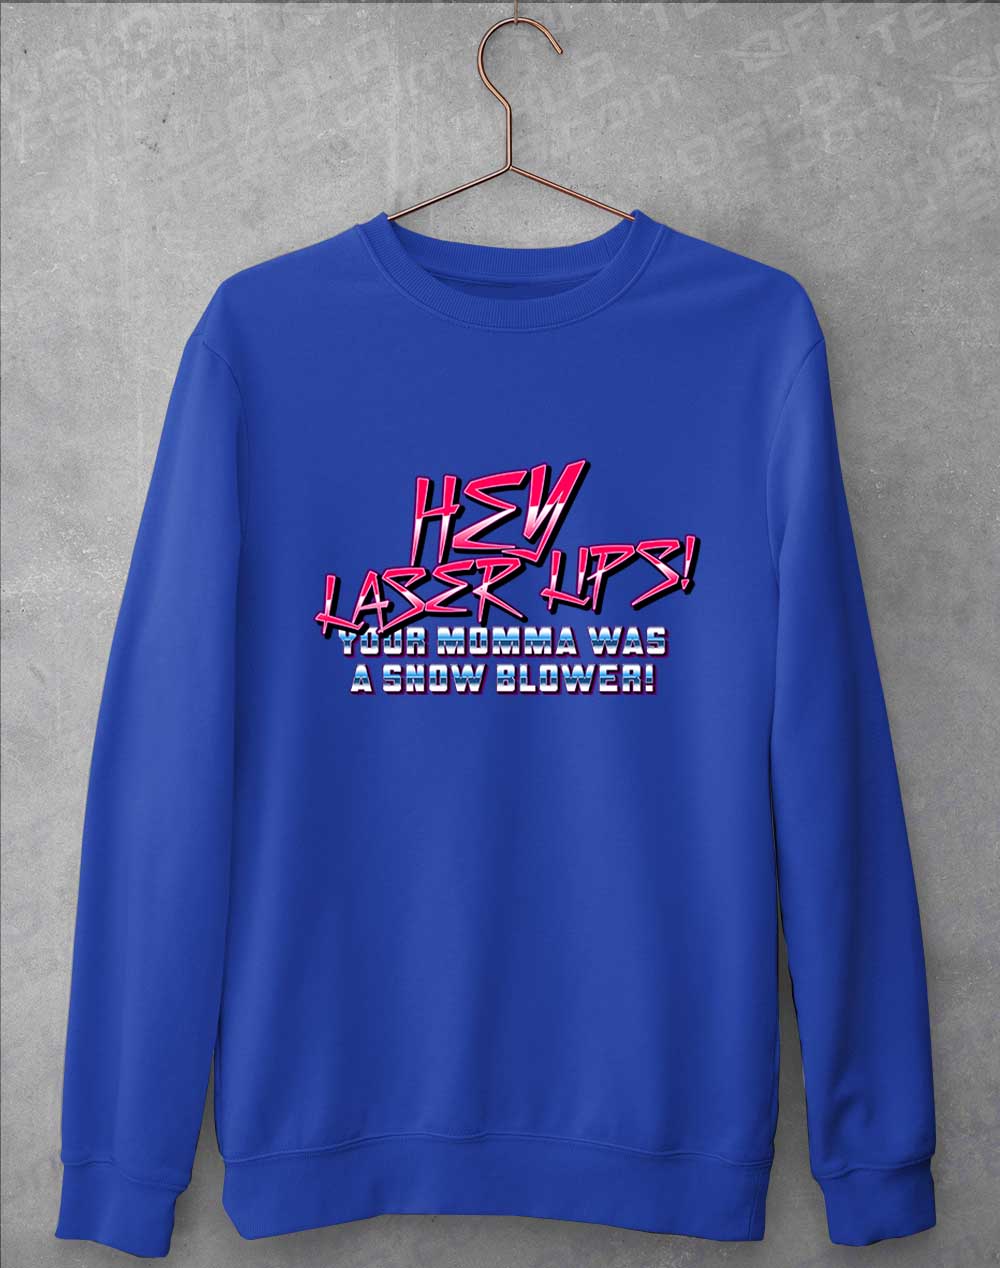 Royal Blue - Hey Laser Lips Sweatshirt